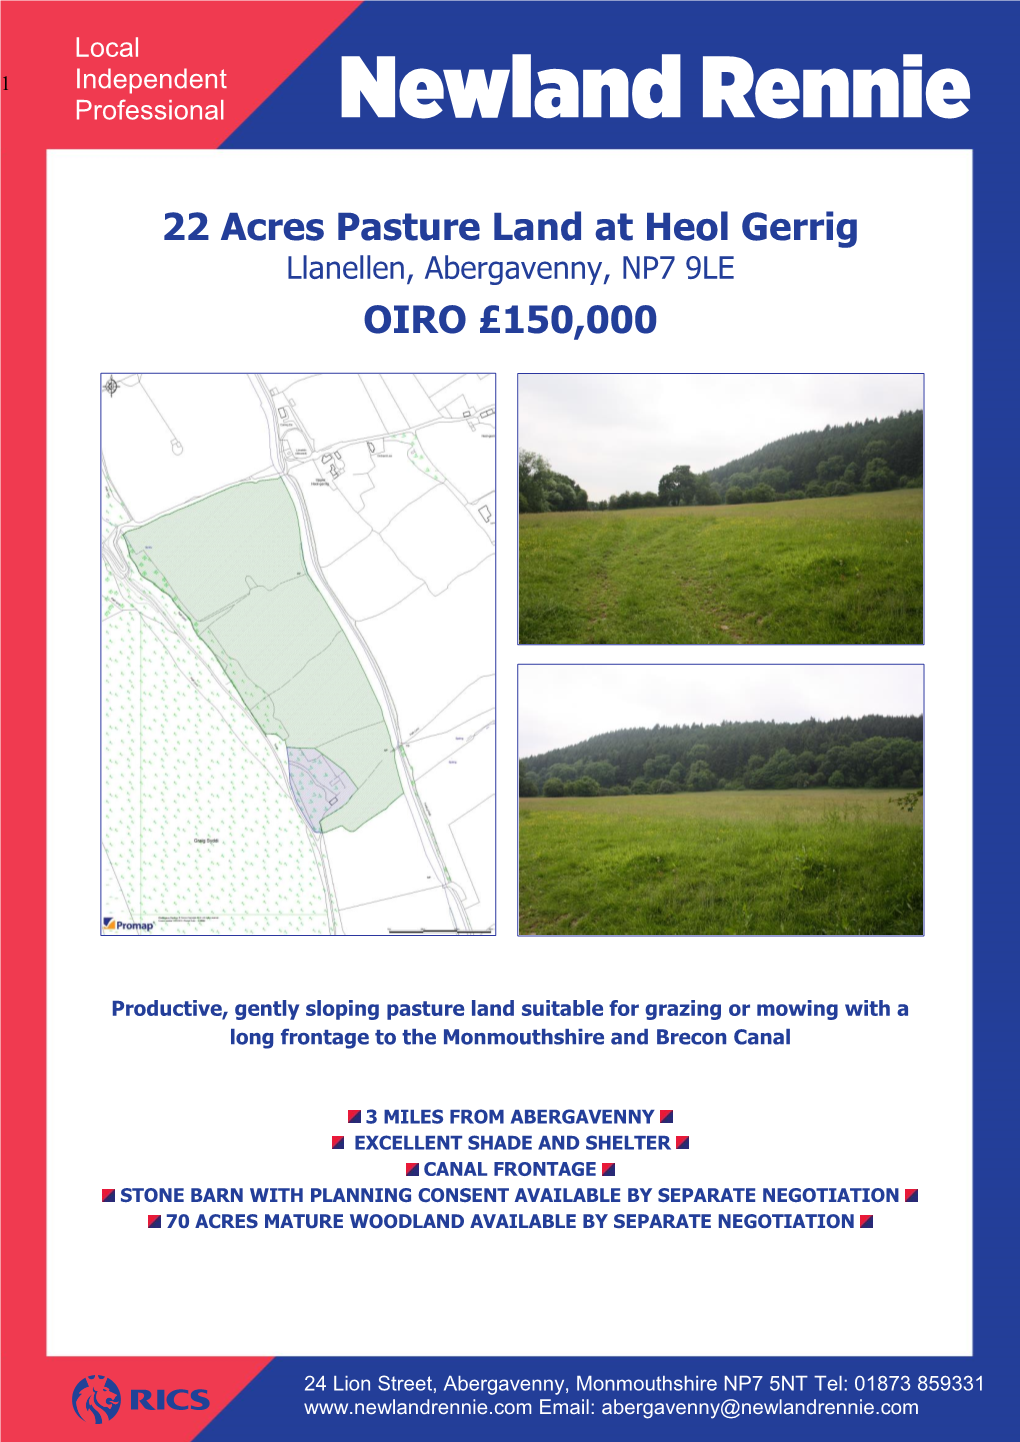 22 Acres Pasture Land at Heol Gerrig OIRO £150,000